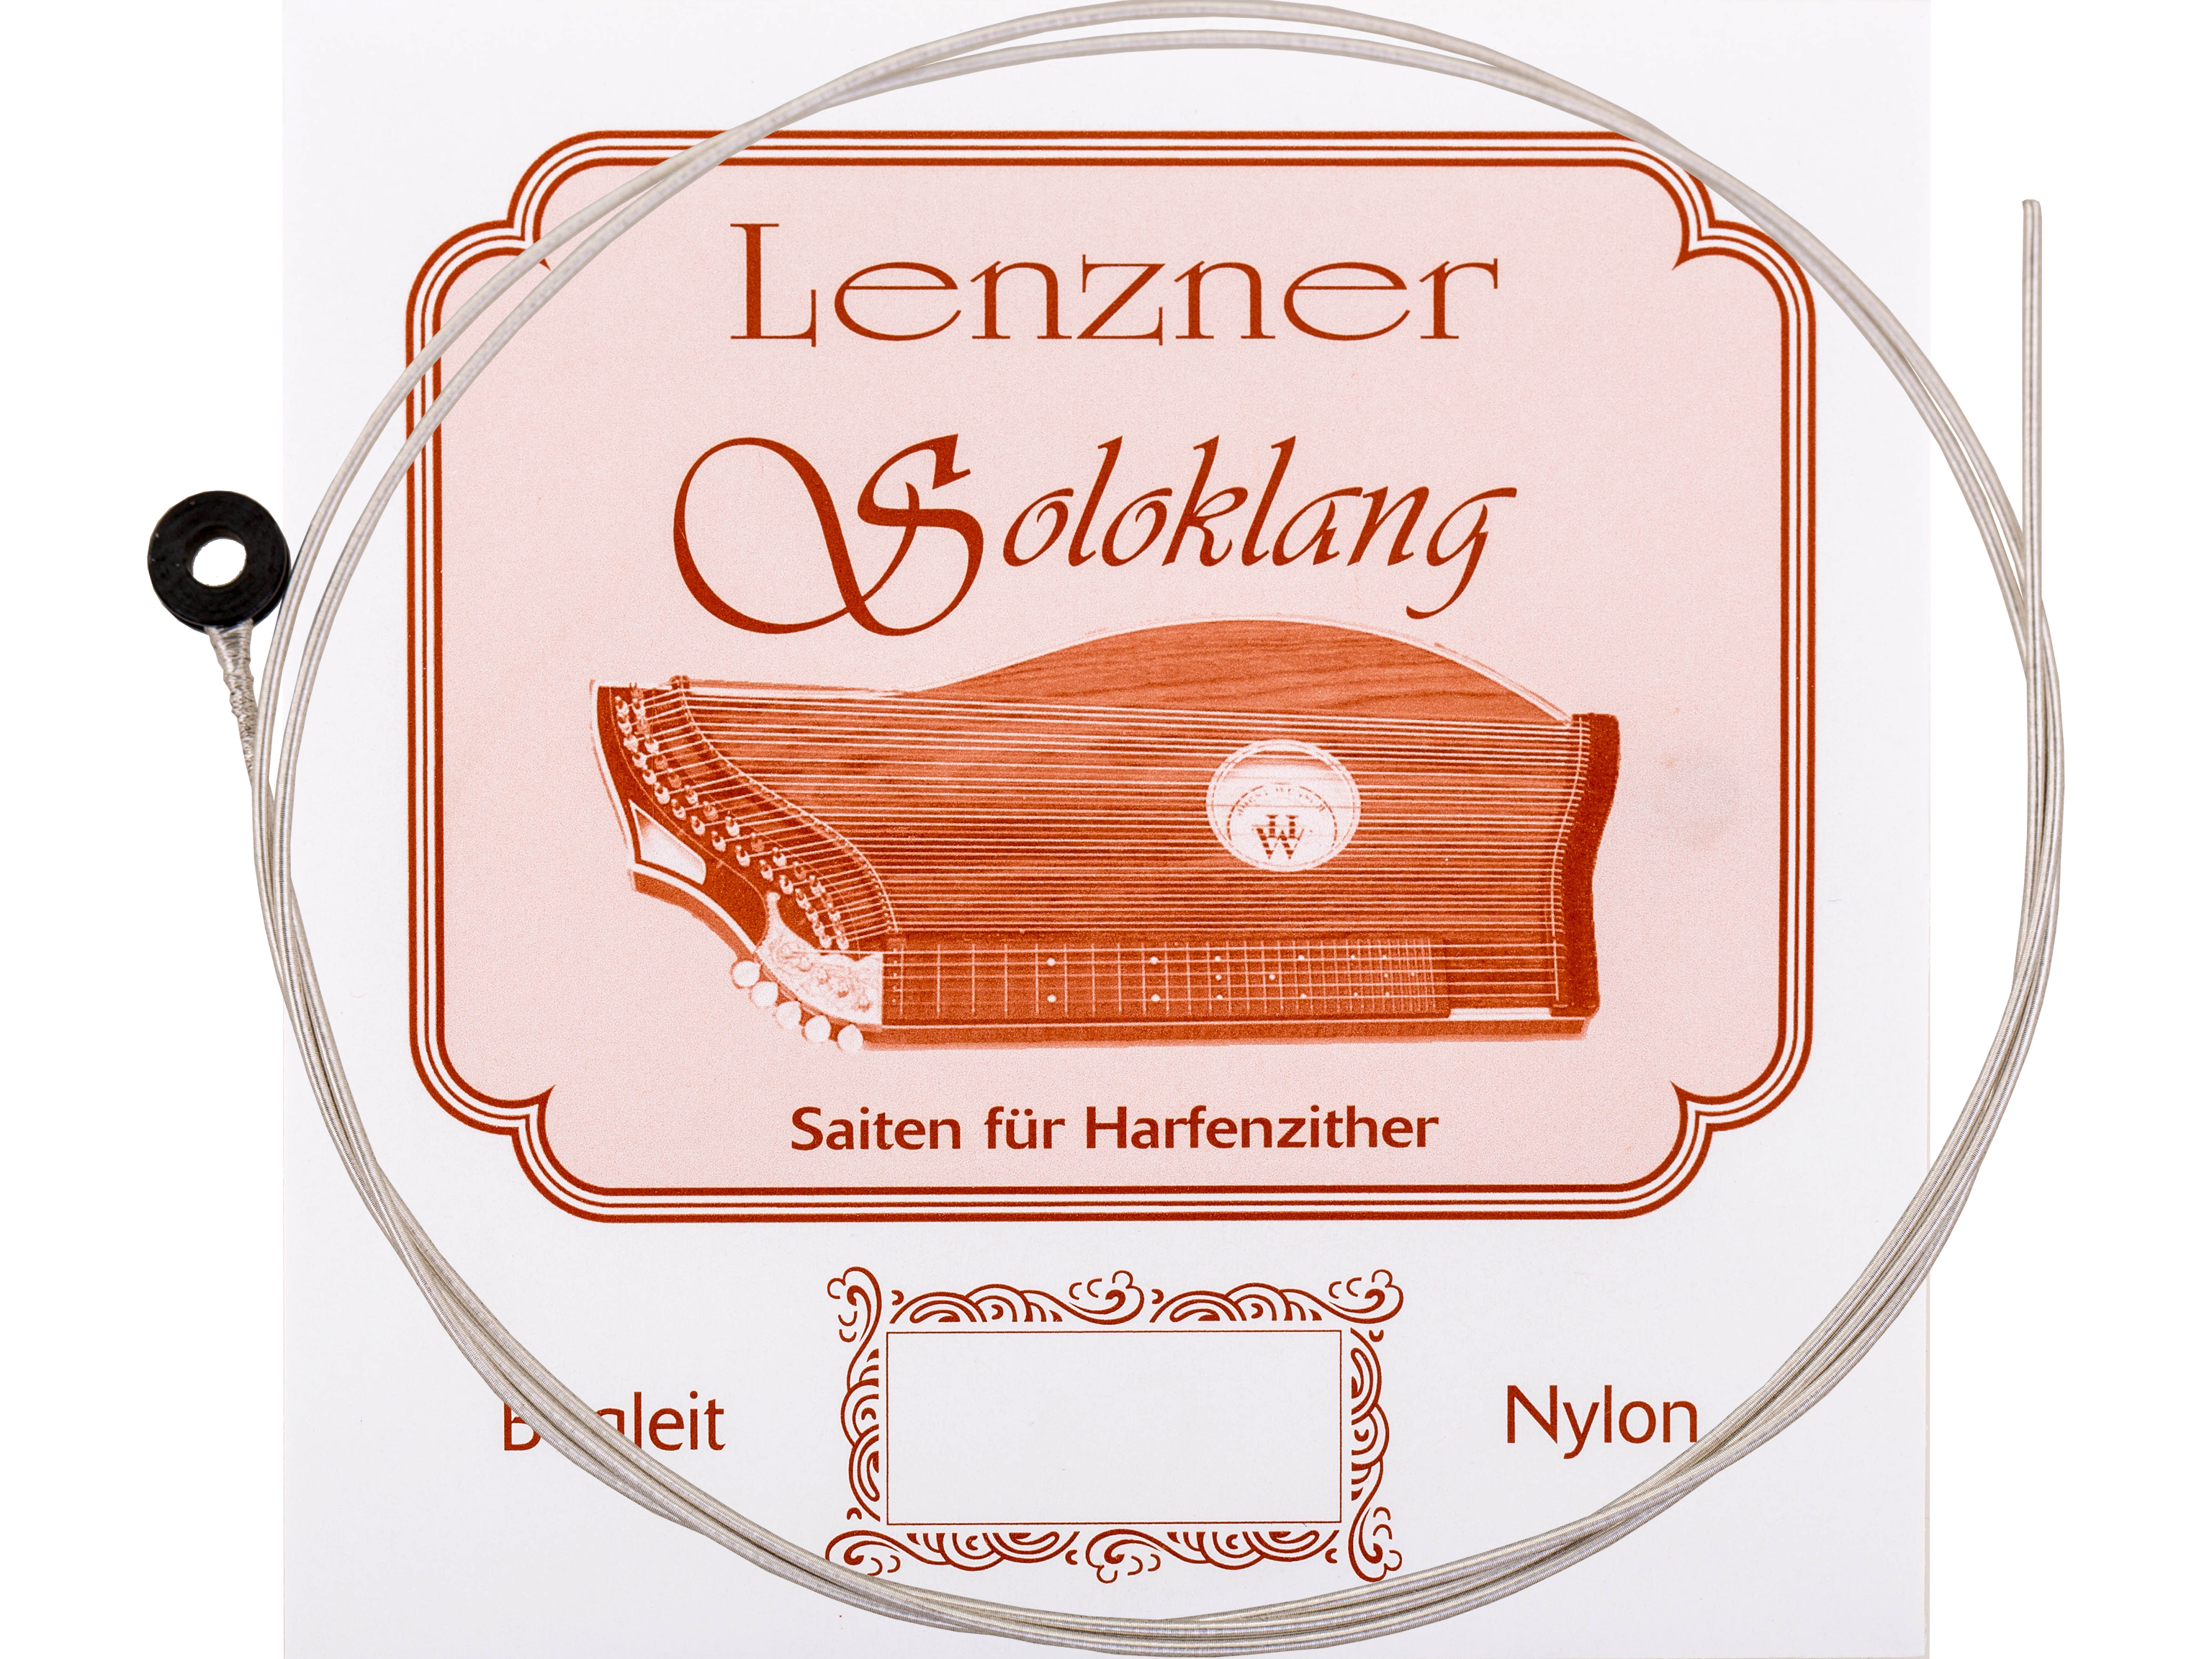 Lenzner 1. es Zithersaite Soloklang Begleit